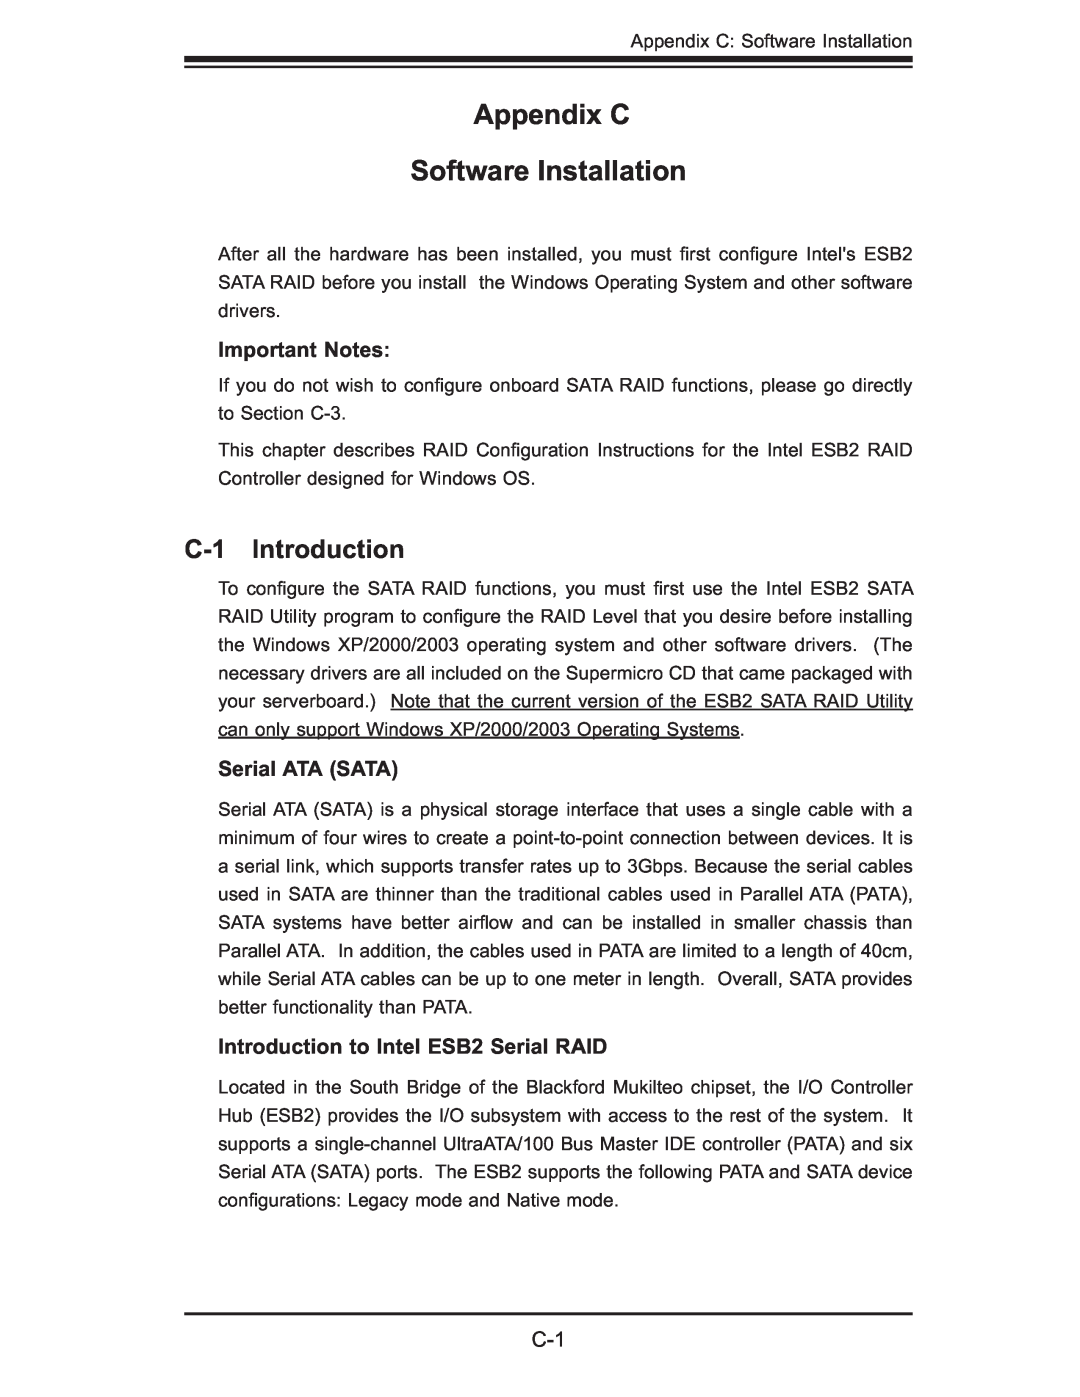 SUPER MICRO Computer 6025B-UR Appendix C Software Installation, C-1 Introduction, Important Notes, Serial ATA SATA 